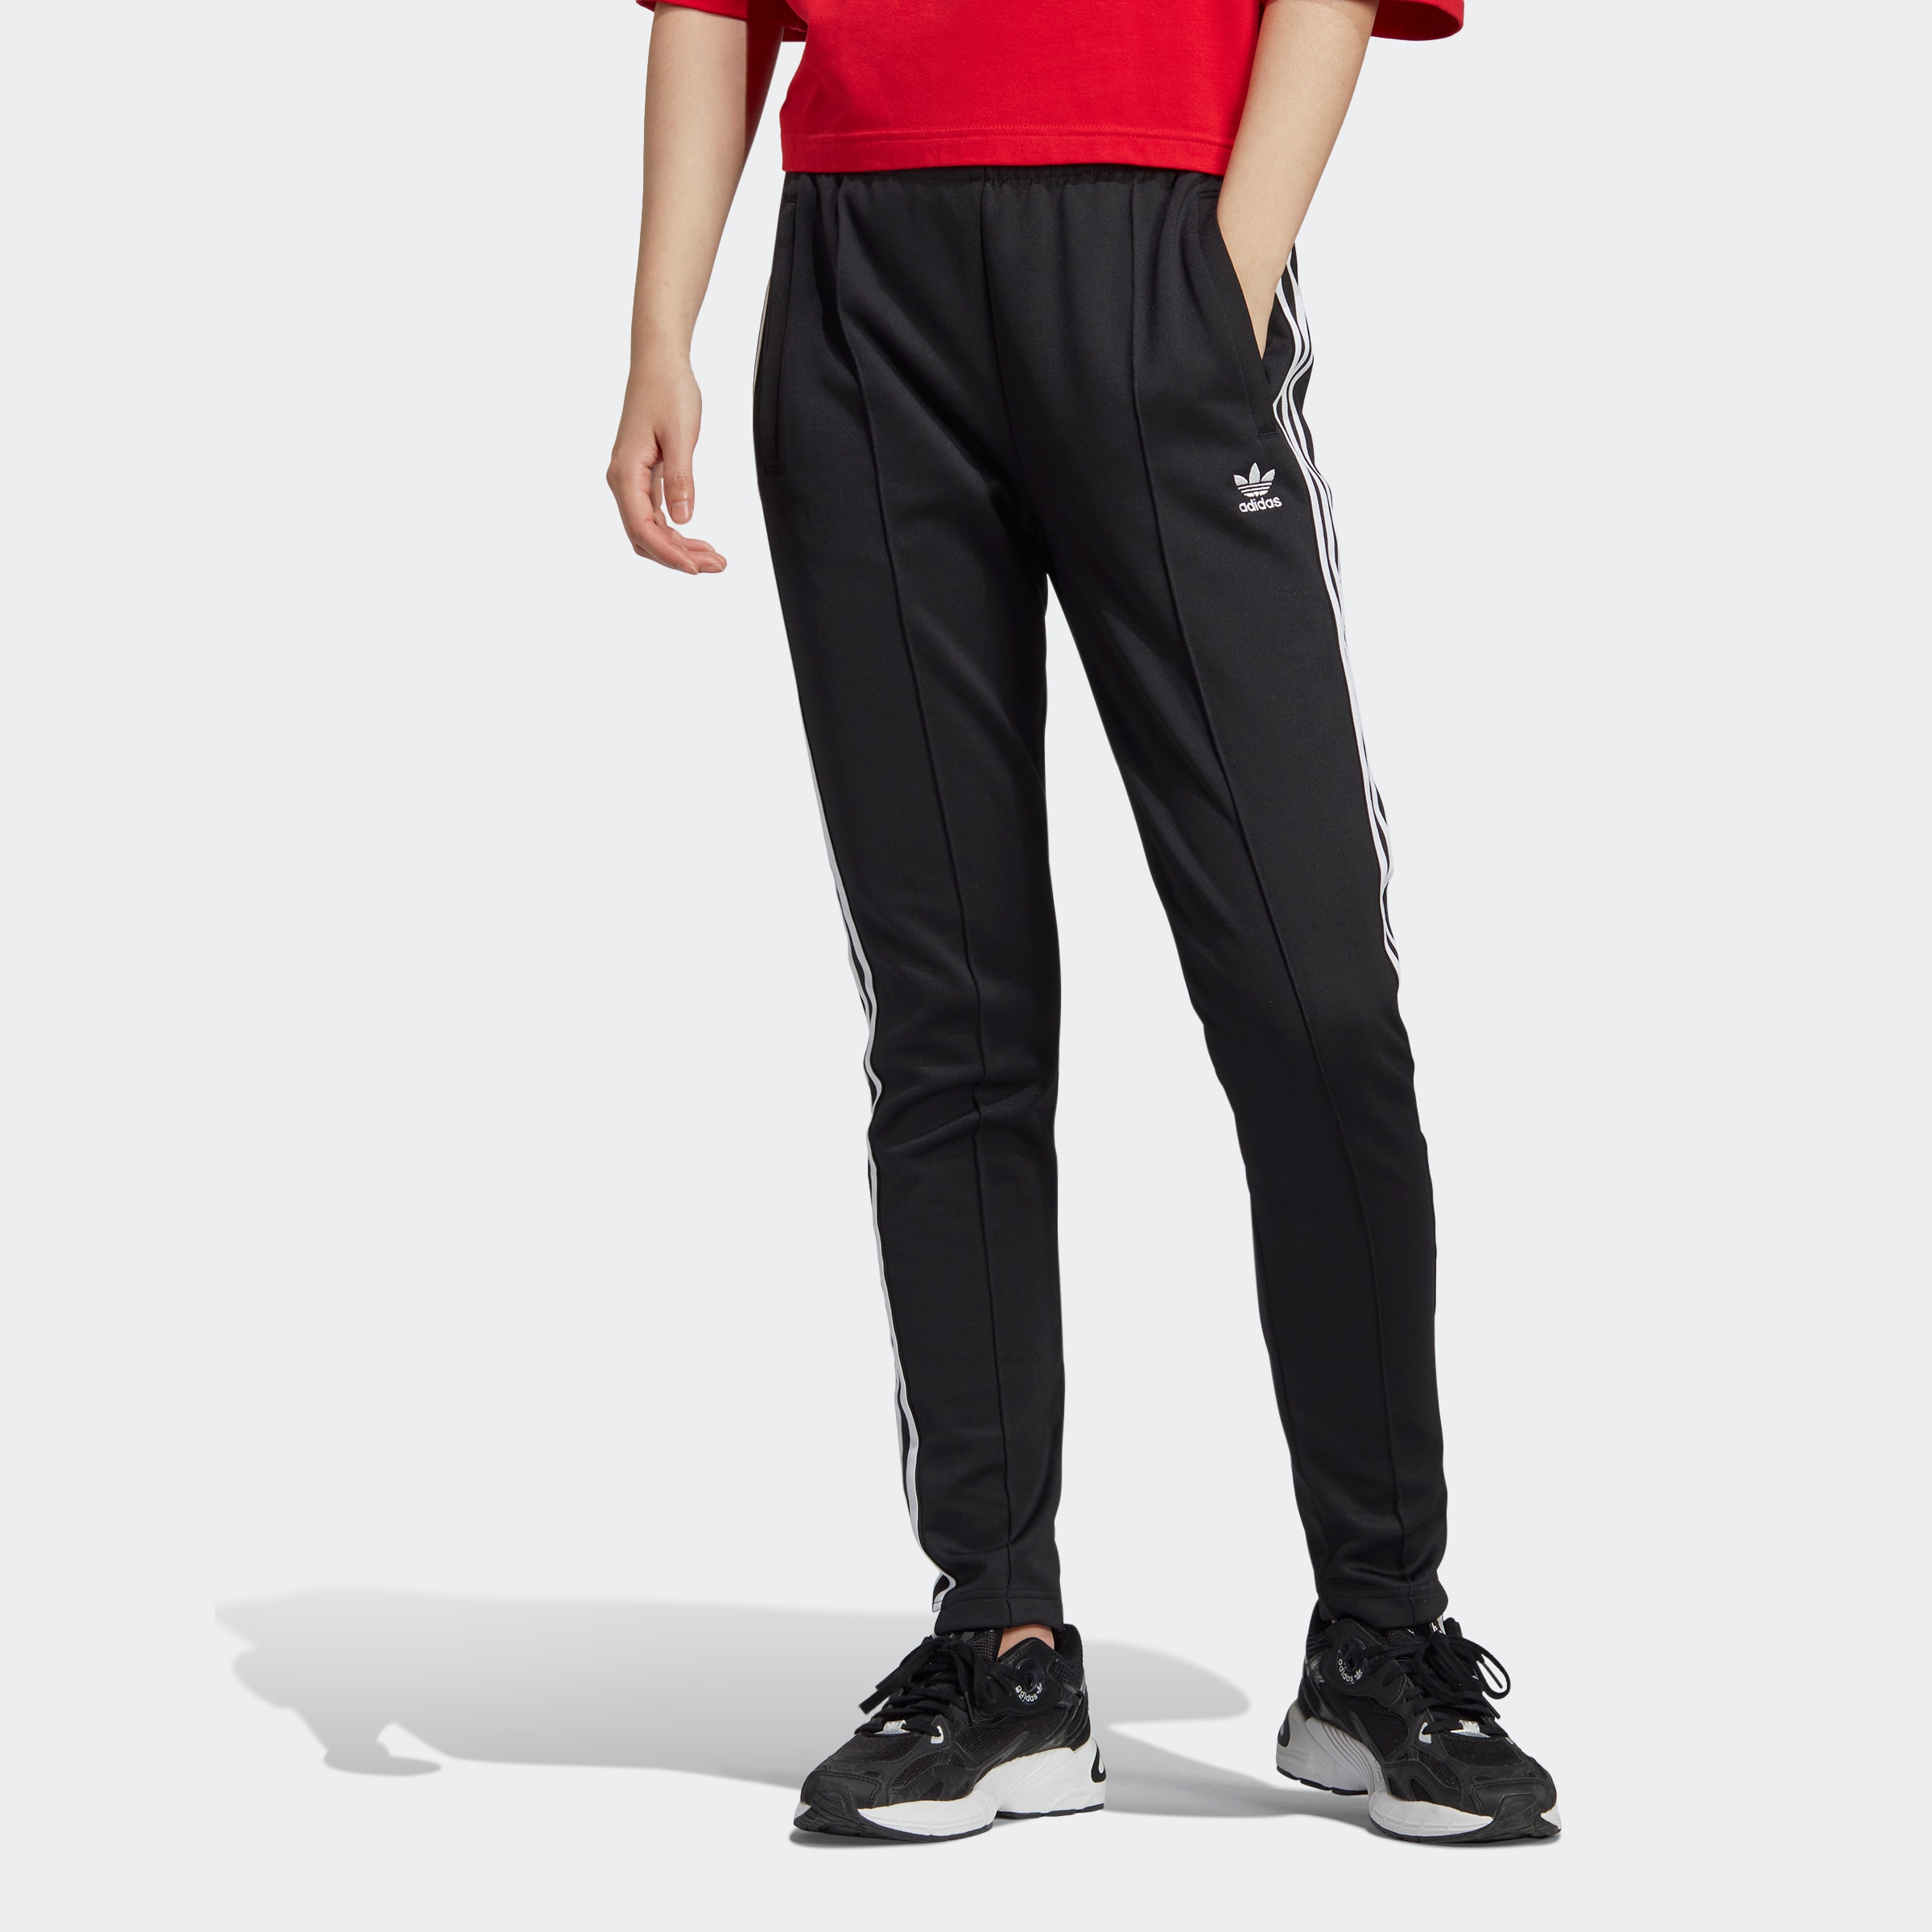 BAUR | SST« Sporthose adidas online »ADICOLOR Originals kaufen